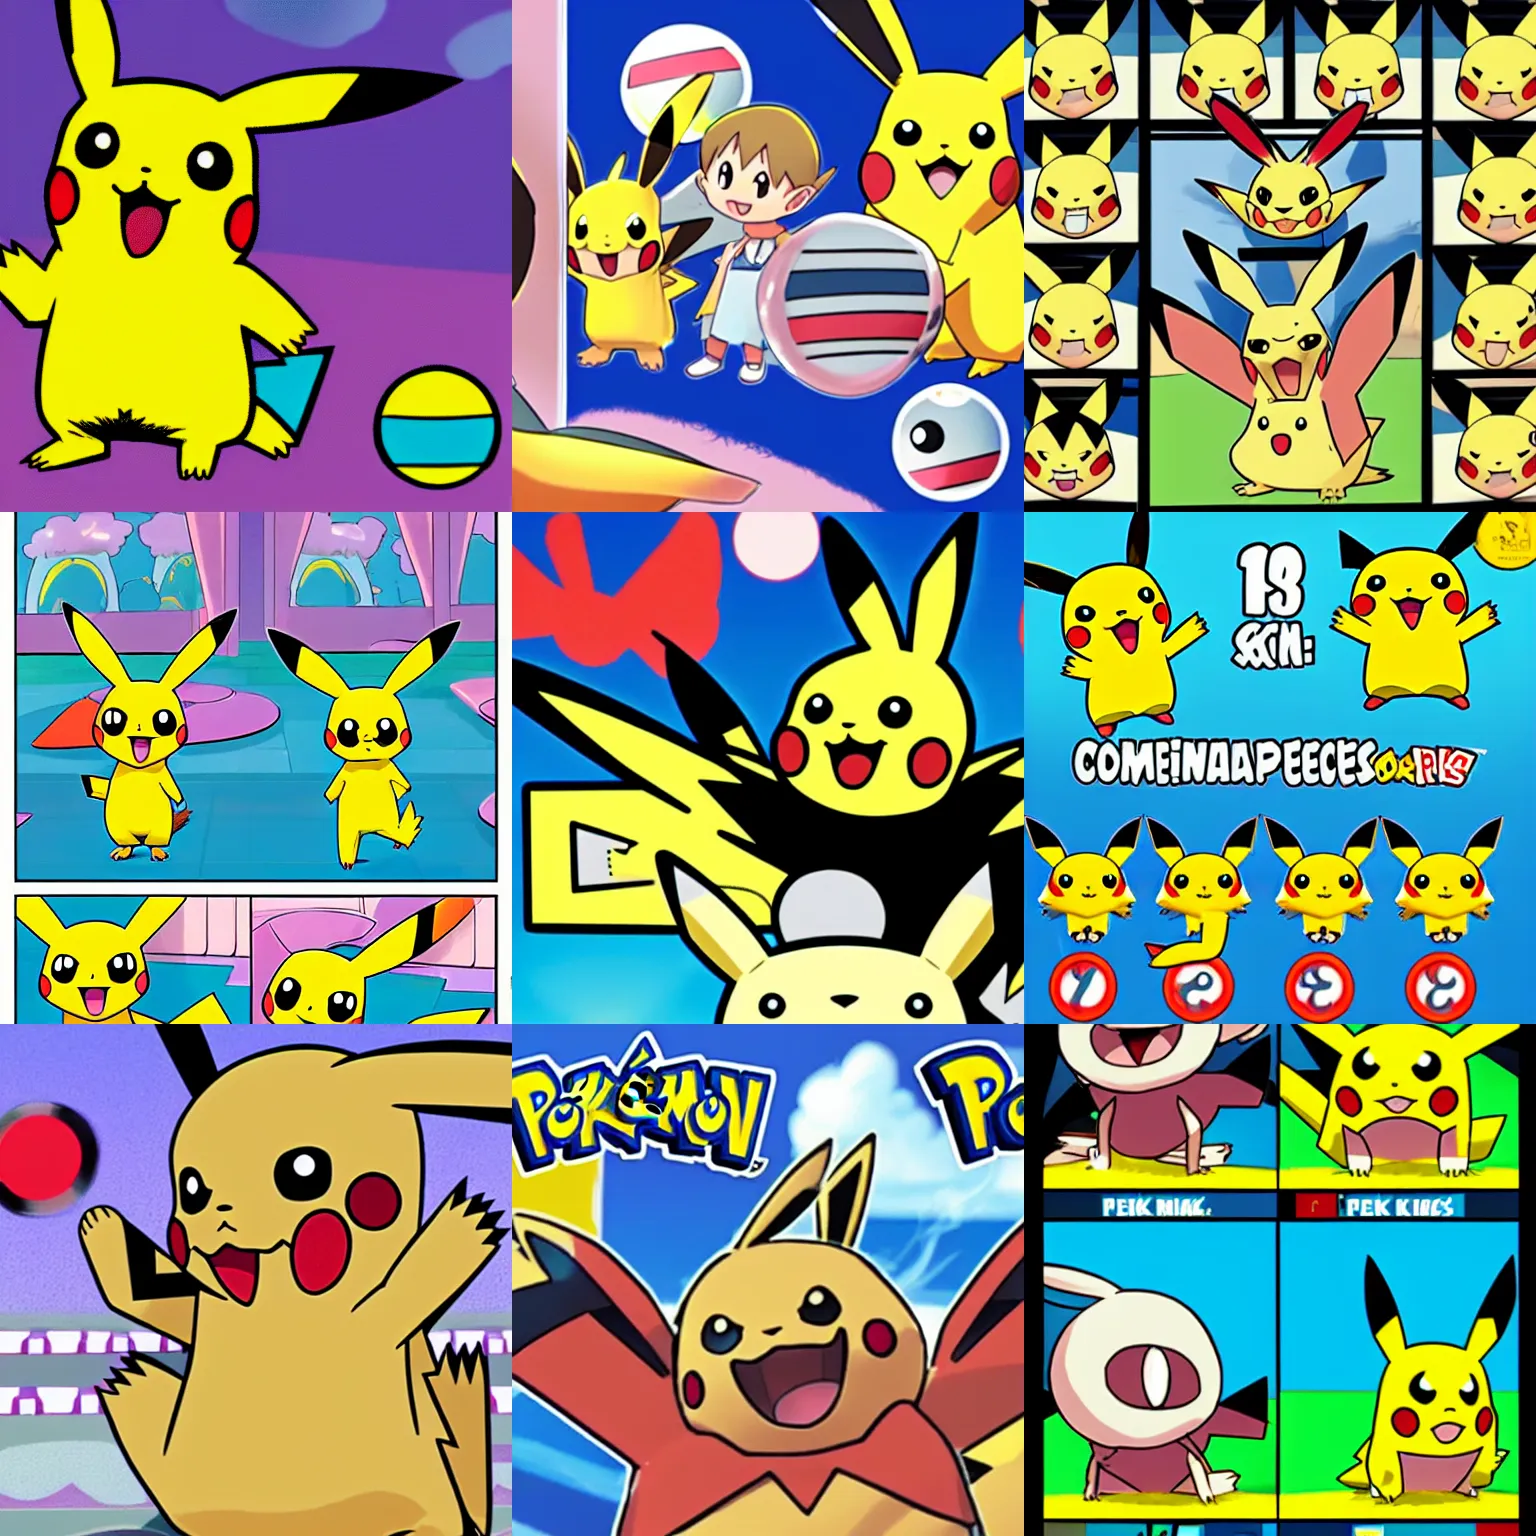 Prompt: a pokemon pikachu doing the peekaboo kids game, in pokemon comic